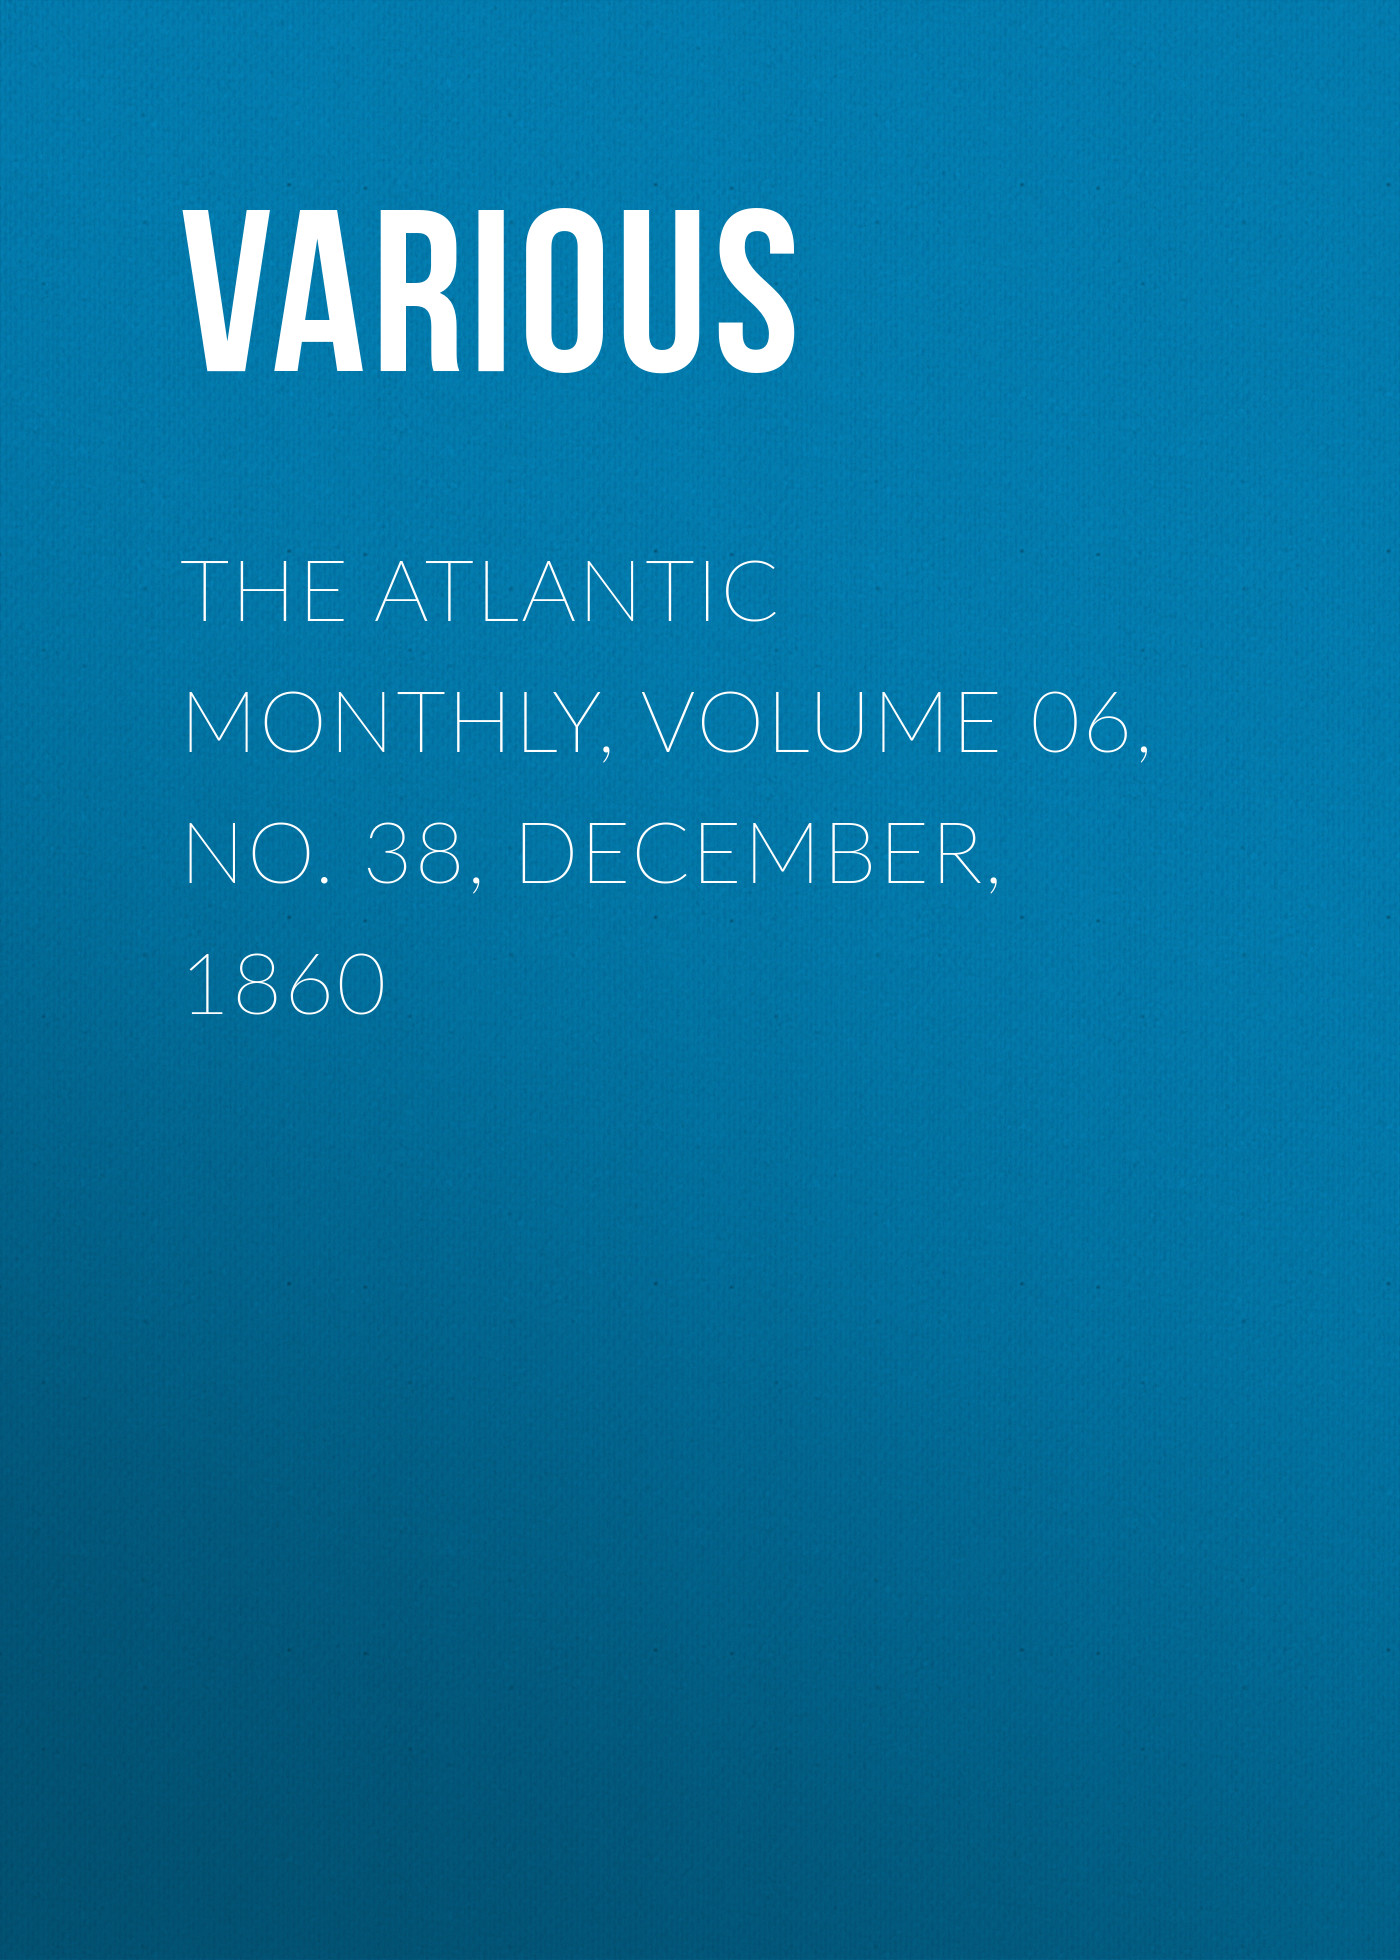 The Atlantic Monthly, Volume 06, No. 38, December, 1860